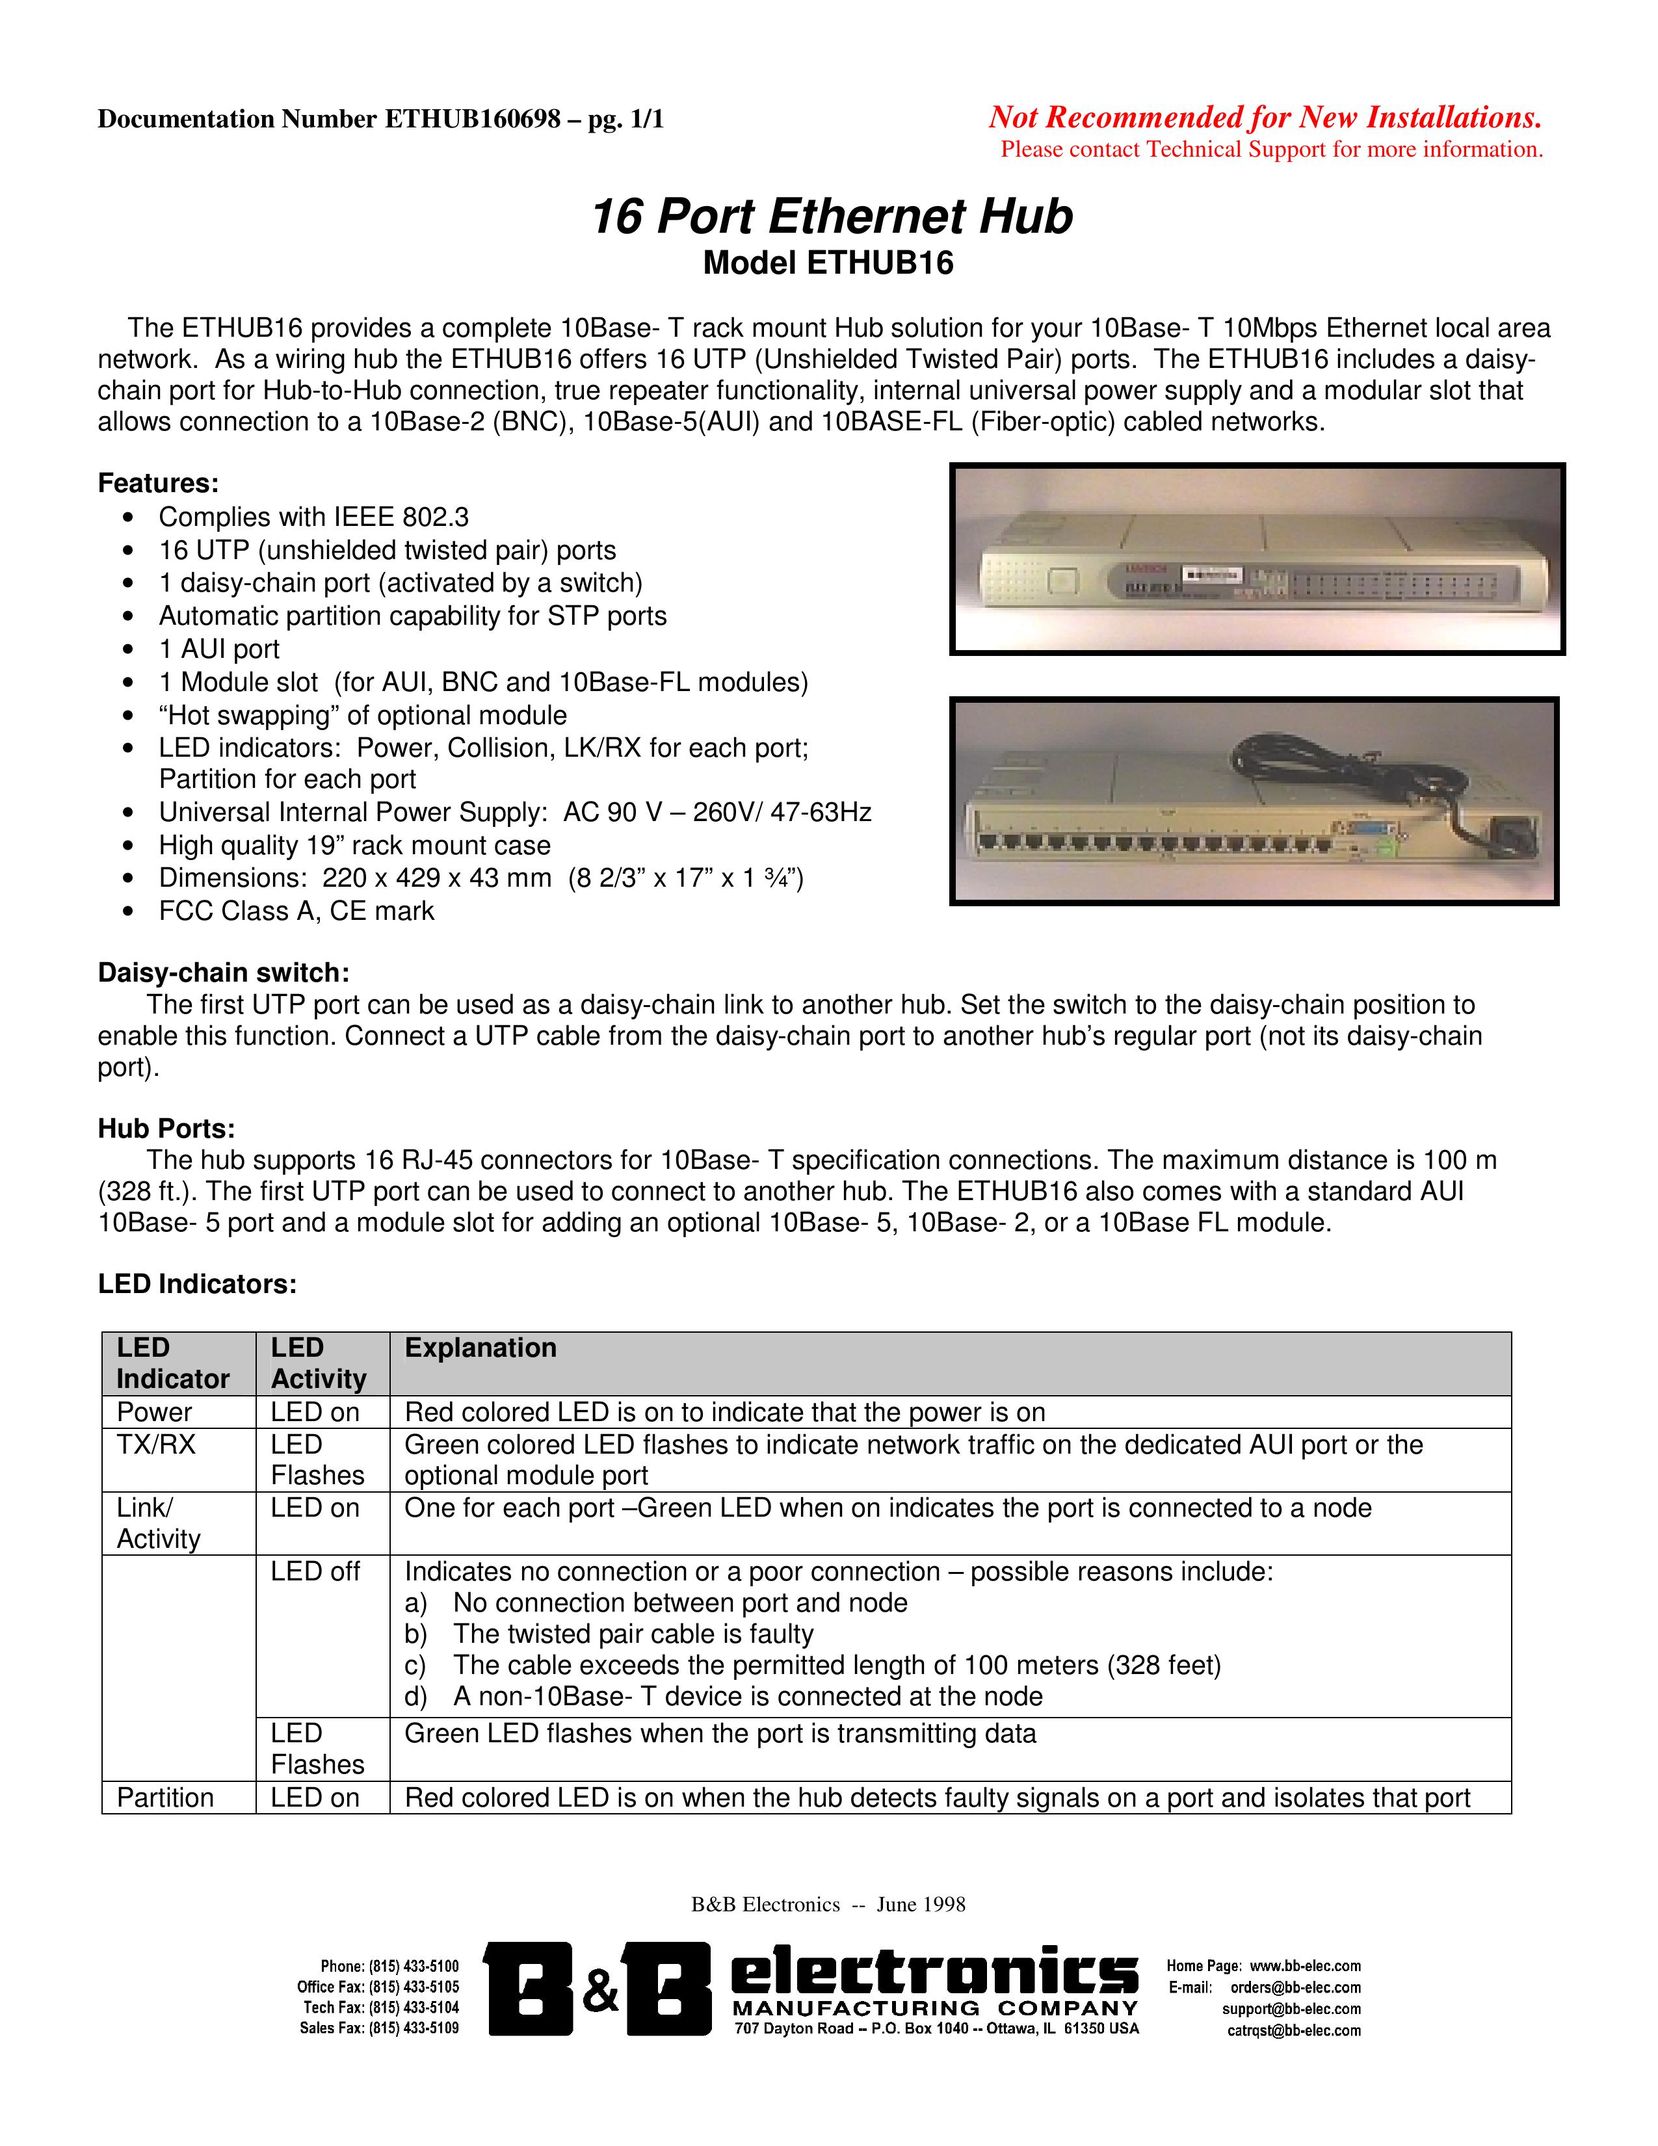 B&B Electronics ETHUB16 Switch User Manual